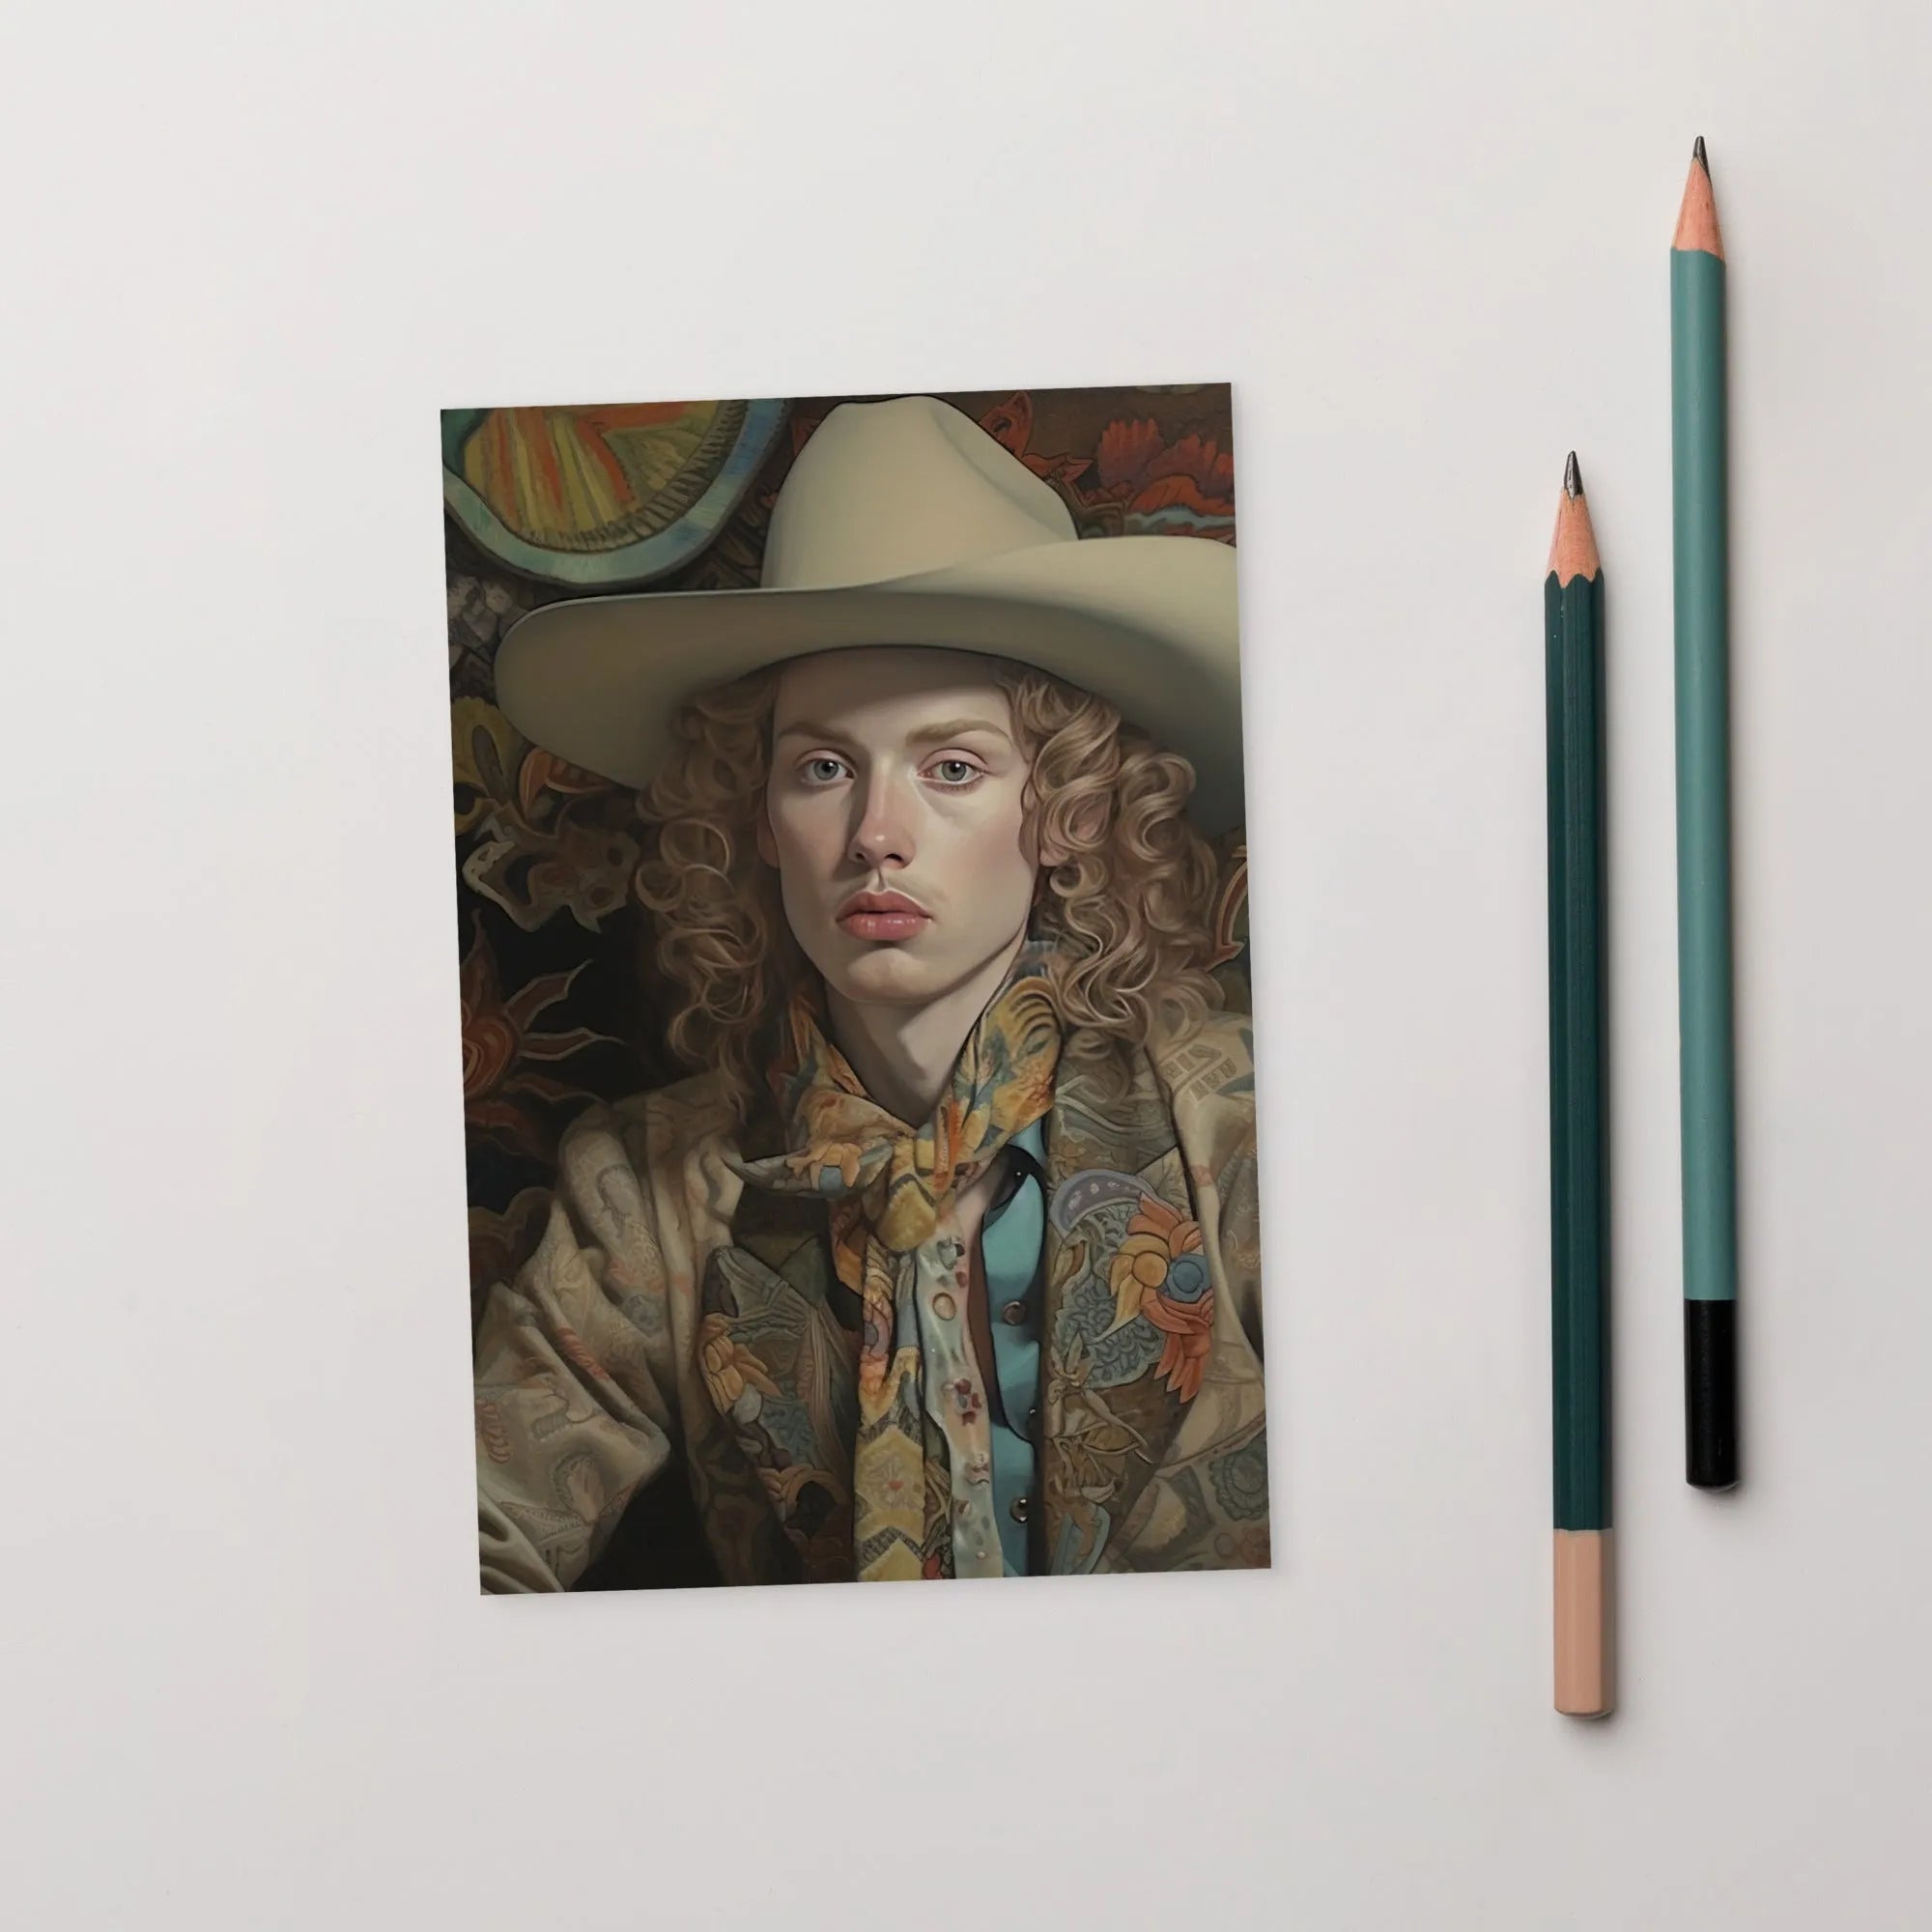 Ollie The Transgender Cowboy - F2m Dandy Transman Art Print - 4’x6’ - Posters Prints & Visual Artwork - Aesthetic Art